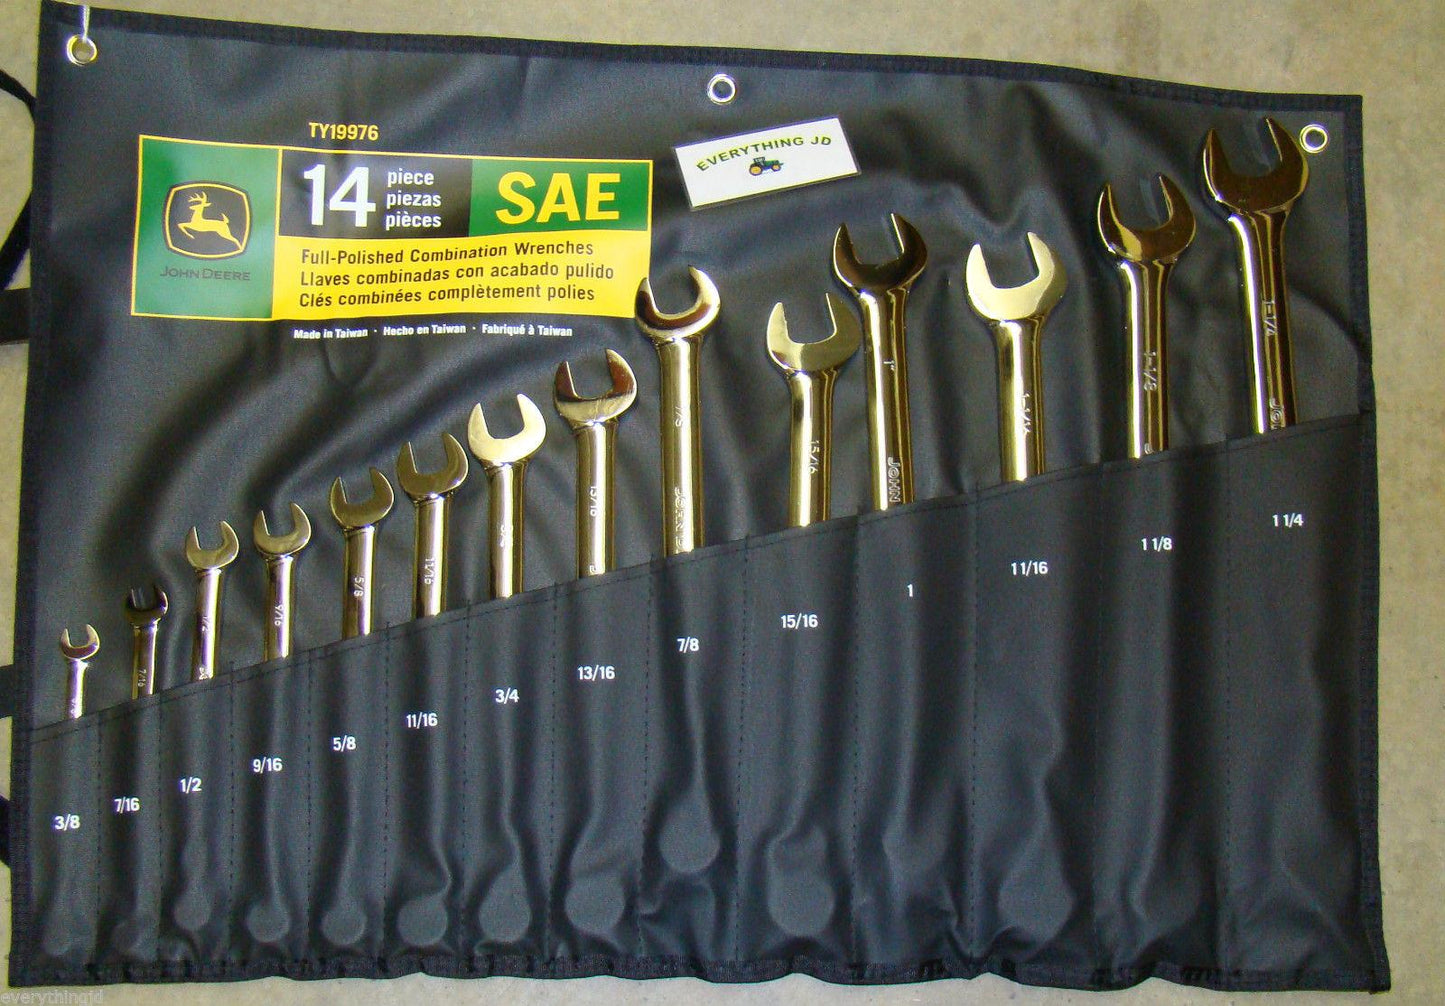 John Deere SAE Full-Polished Combination Wrench Set (14 piece set) - TY19976